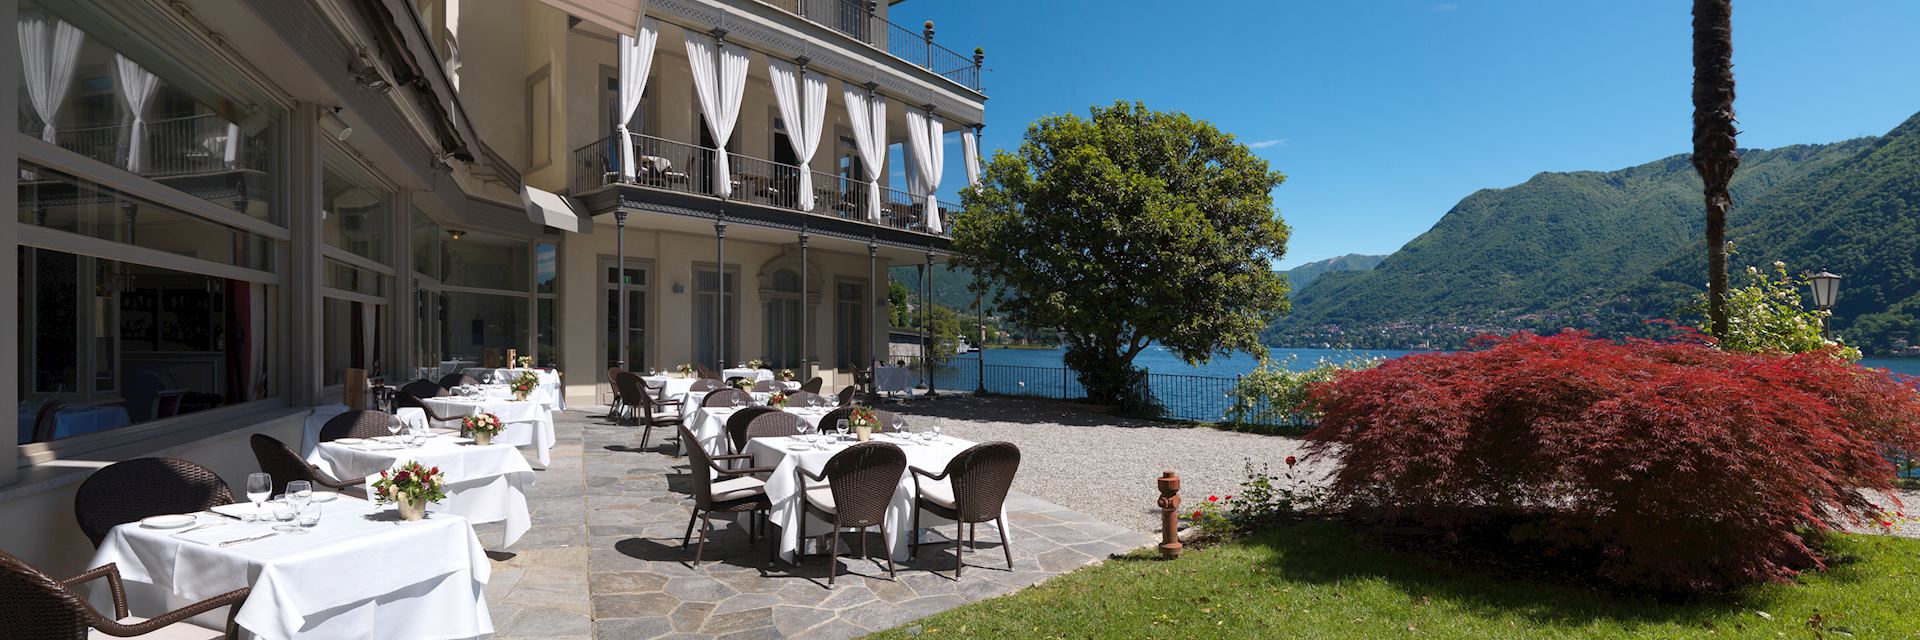 Restaurant terrace, Hotel Villa Flori